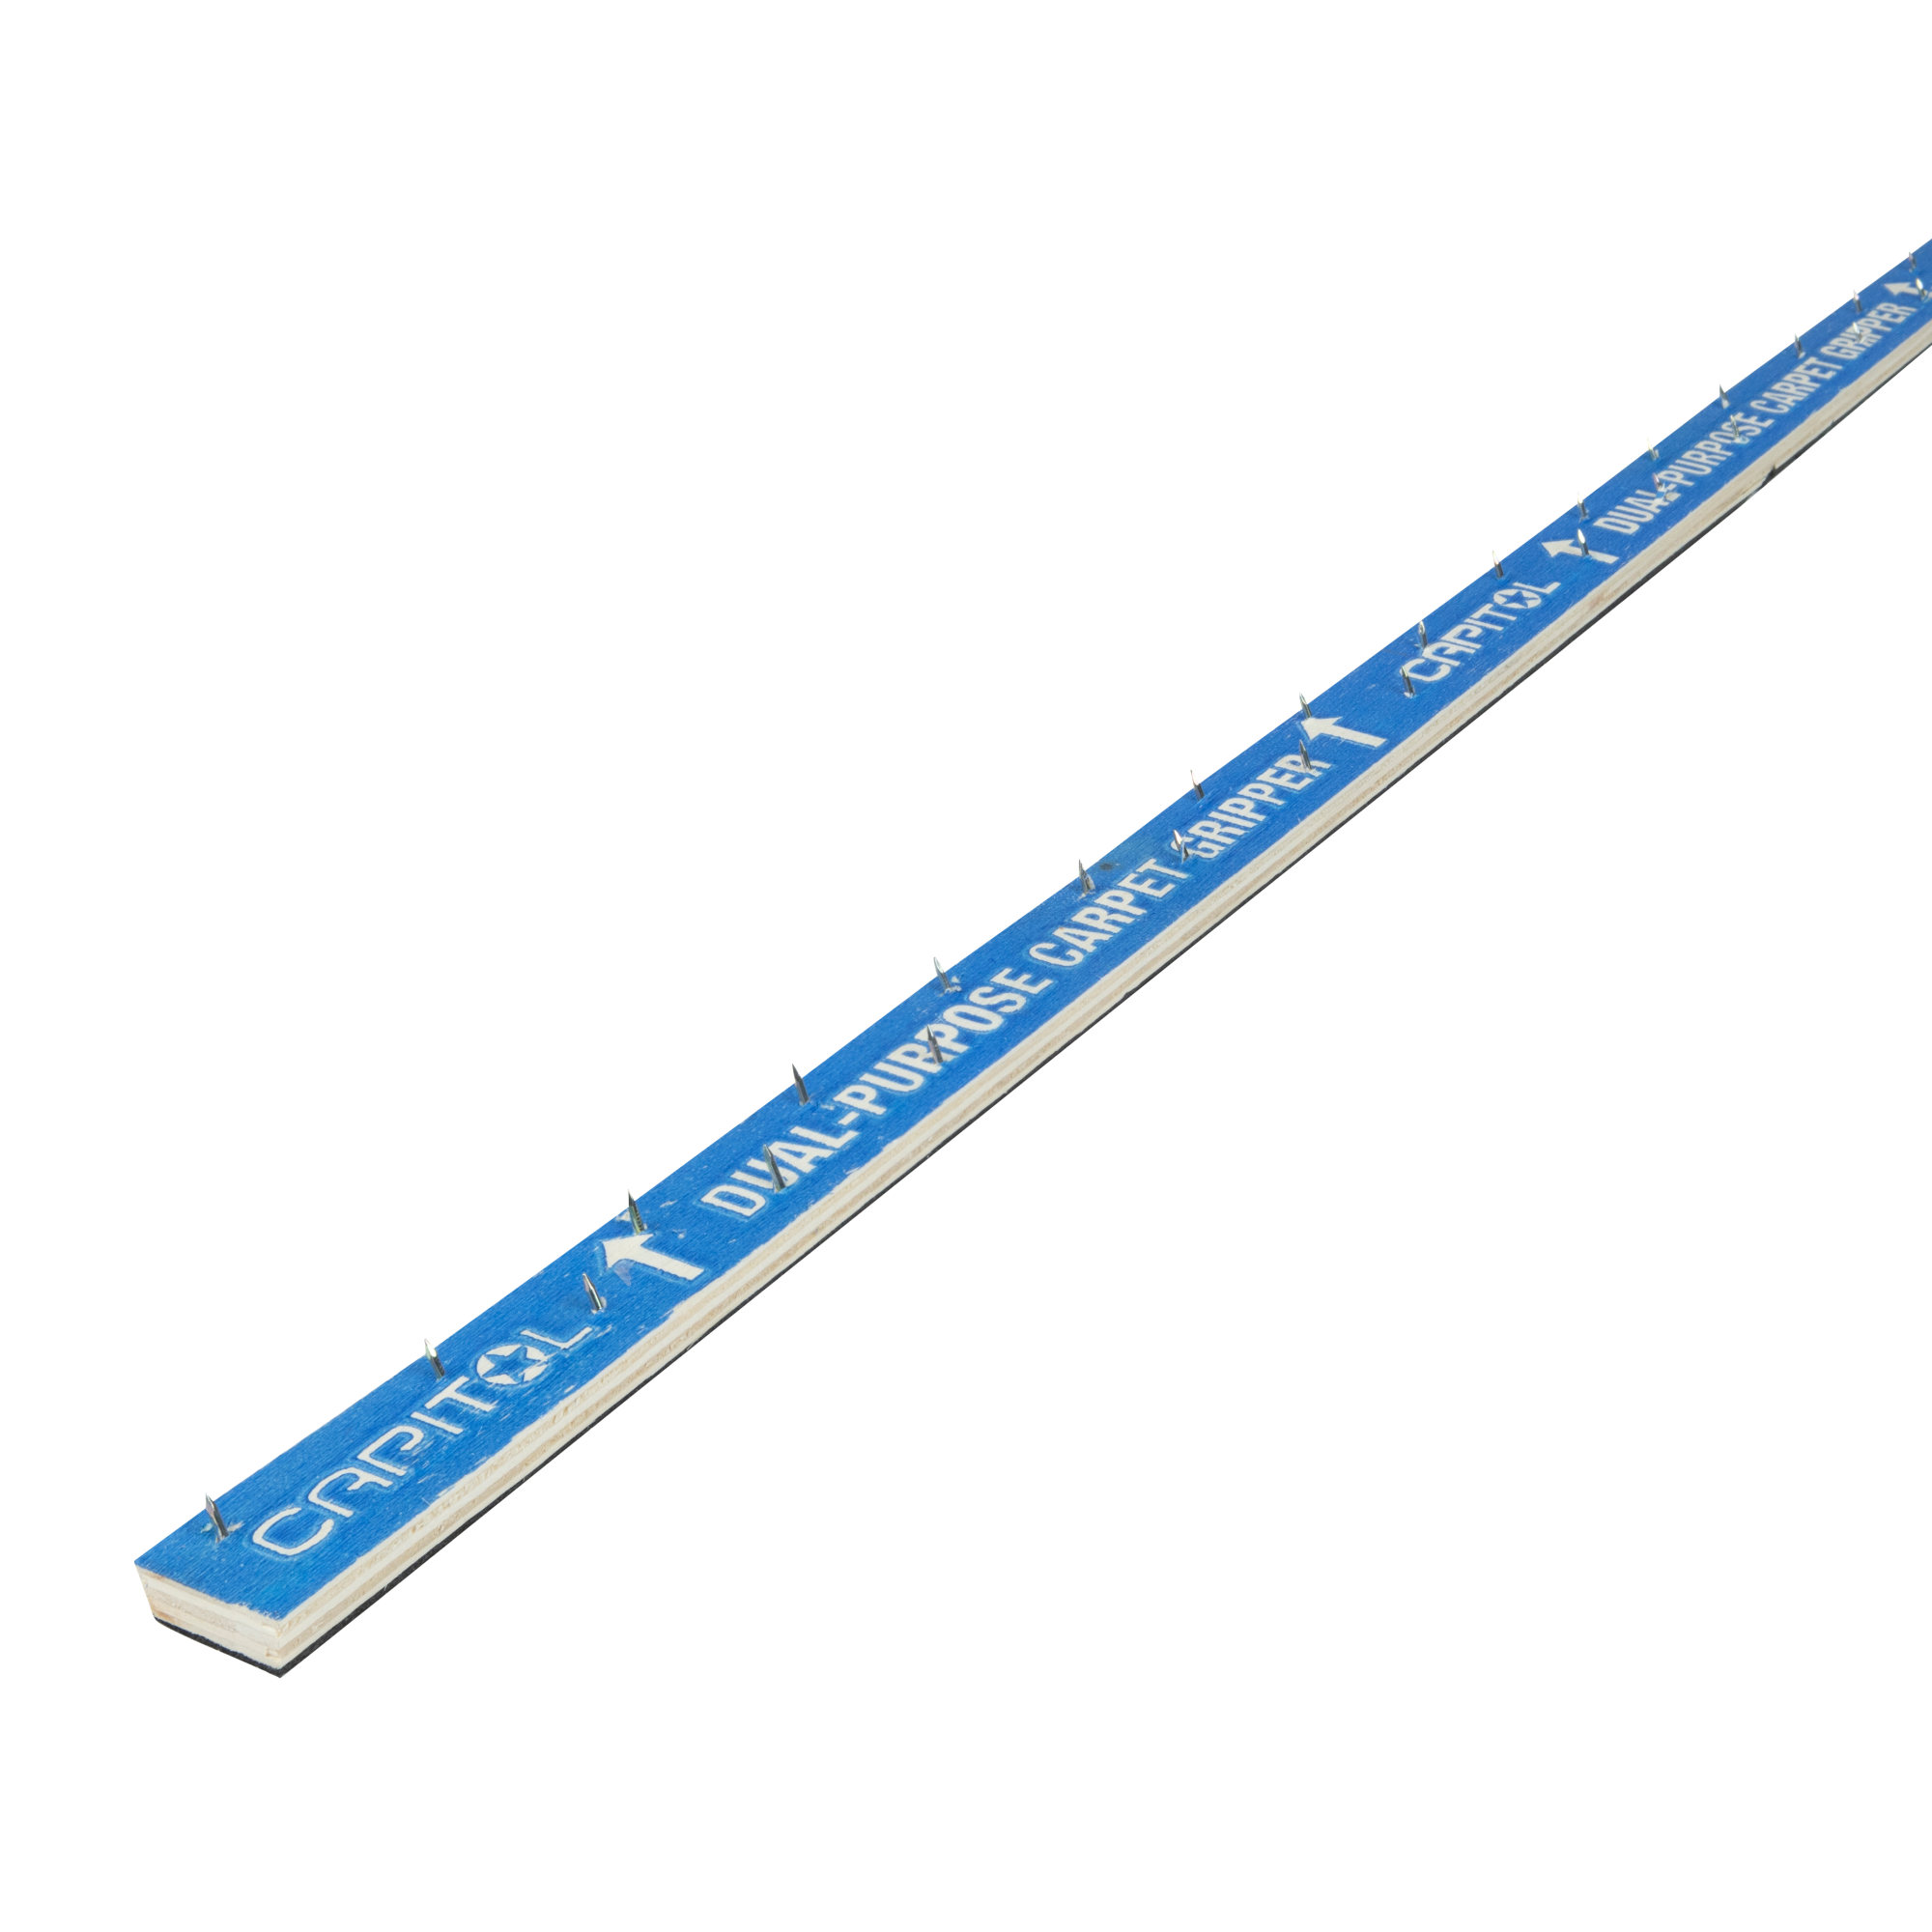 Dual-Purpose Peel & Stick Tack Strip